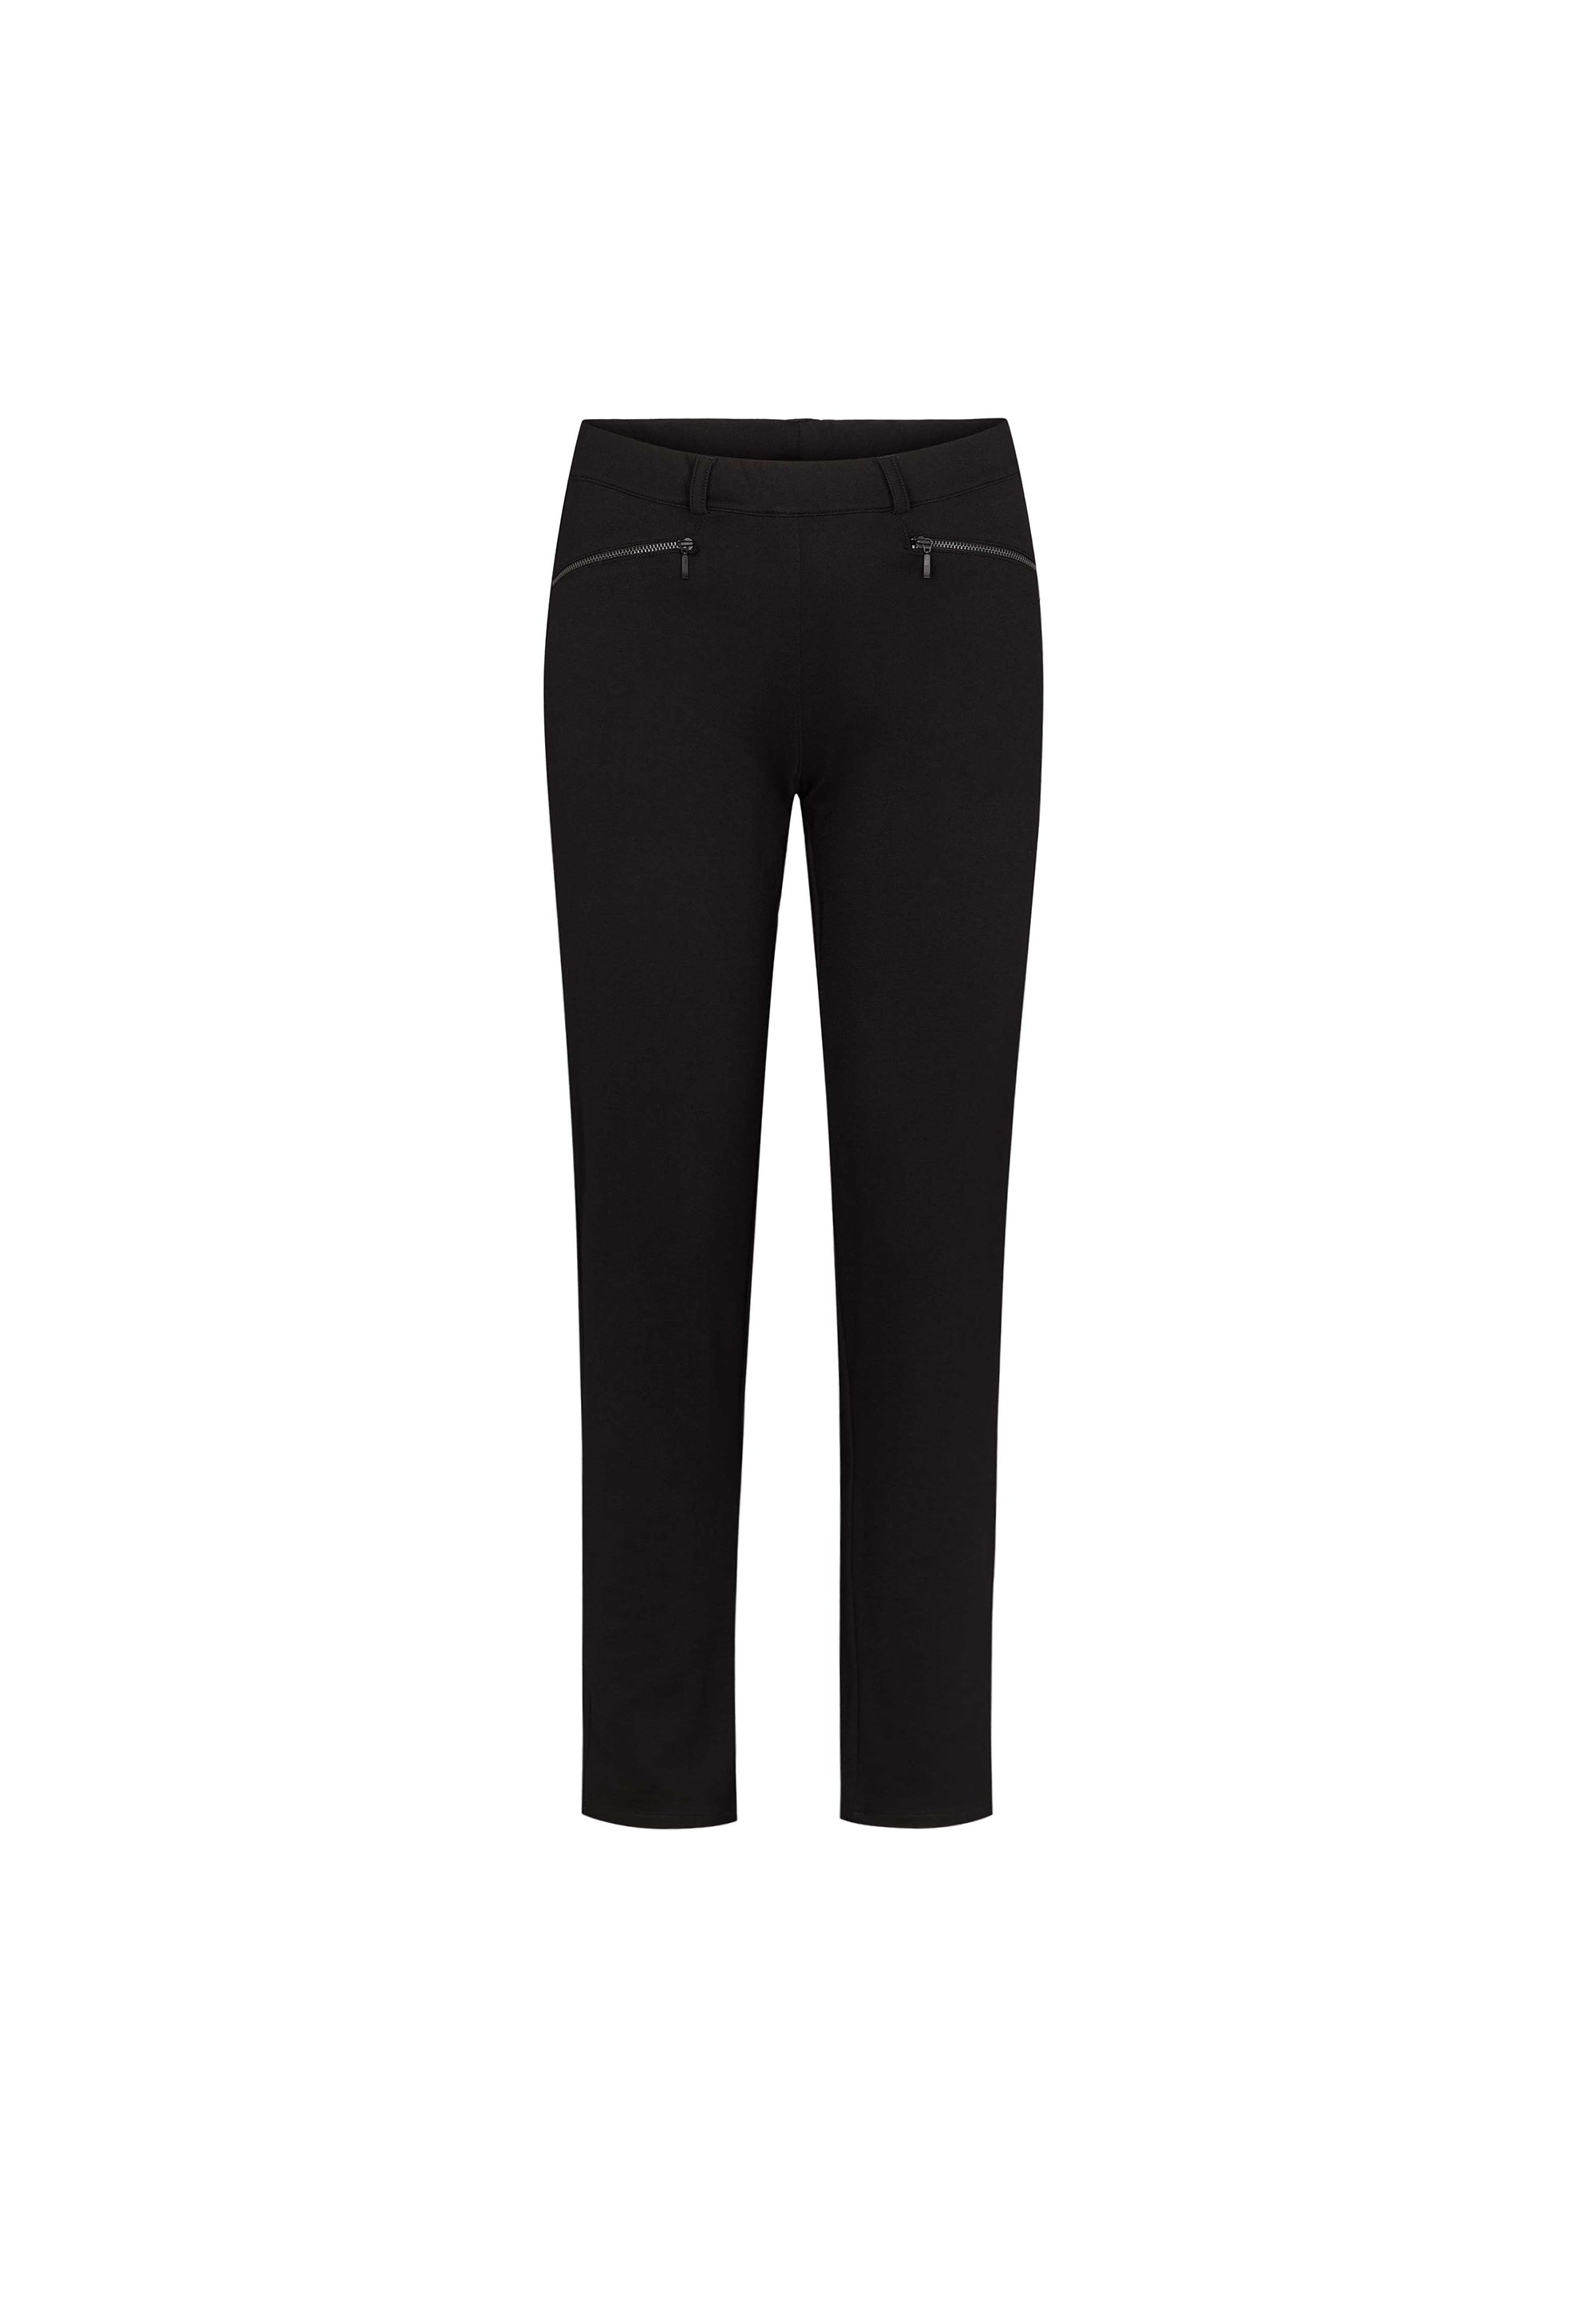 LAURIE Rylie Regular - Medium Length Trousers REGULAR 99143 Black brushed